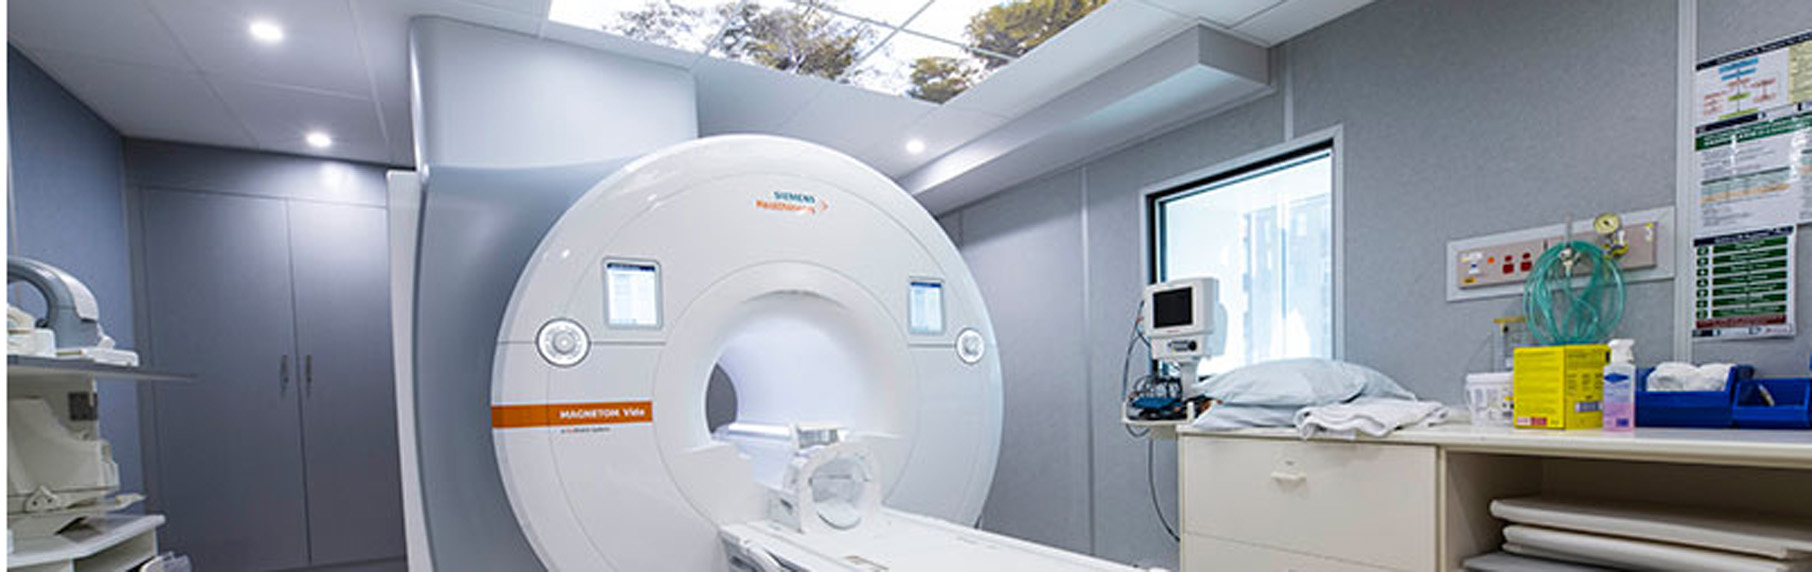 St George Hospital MRI